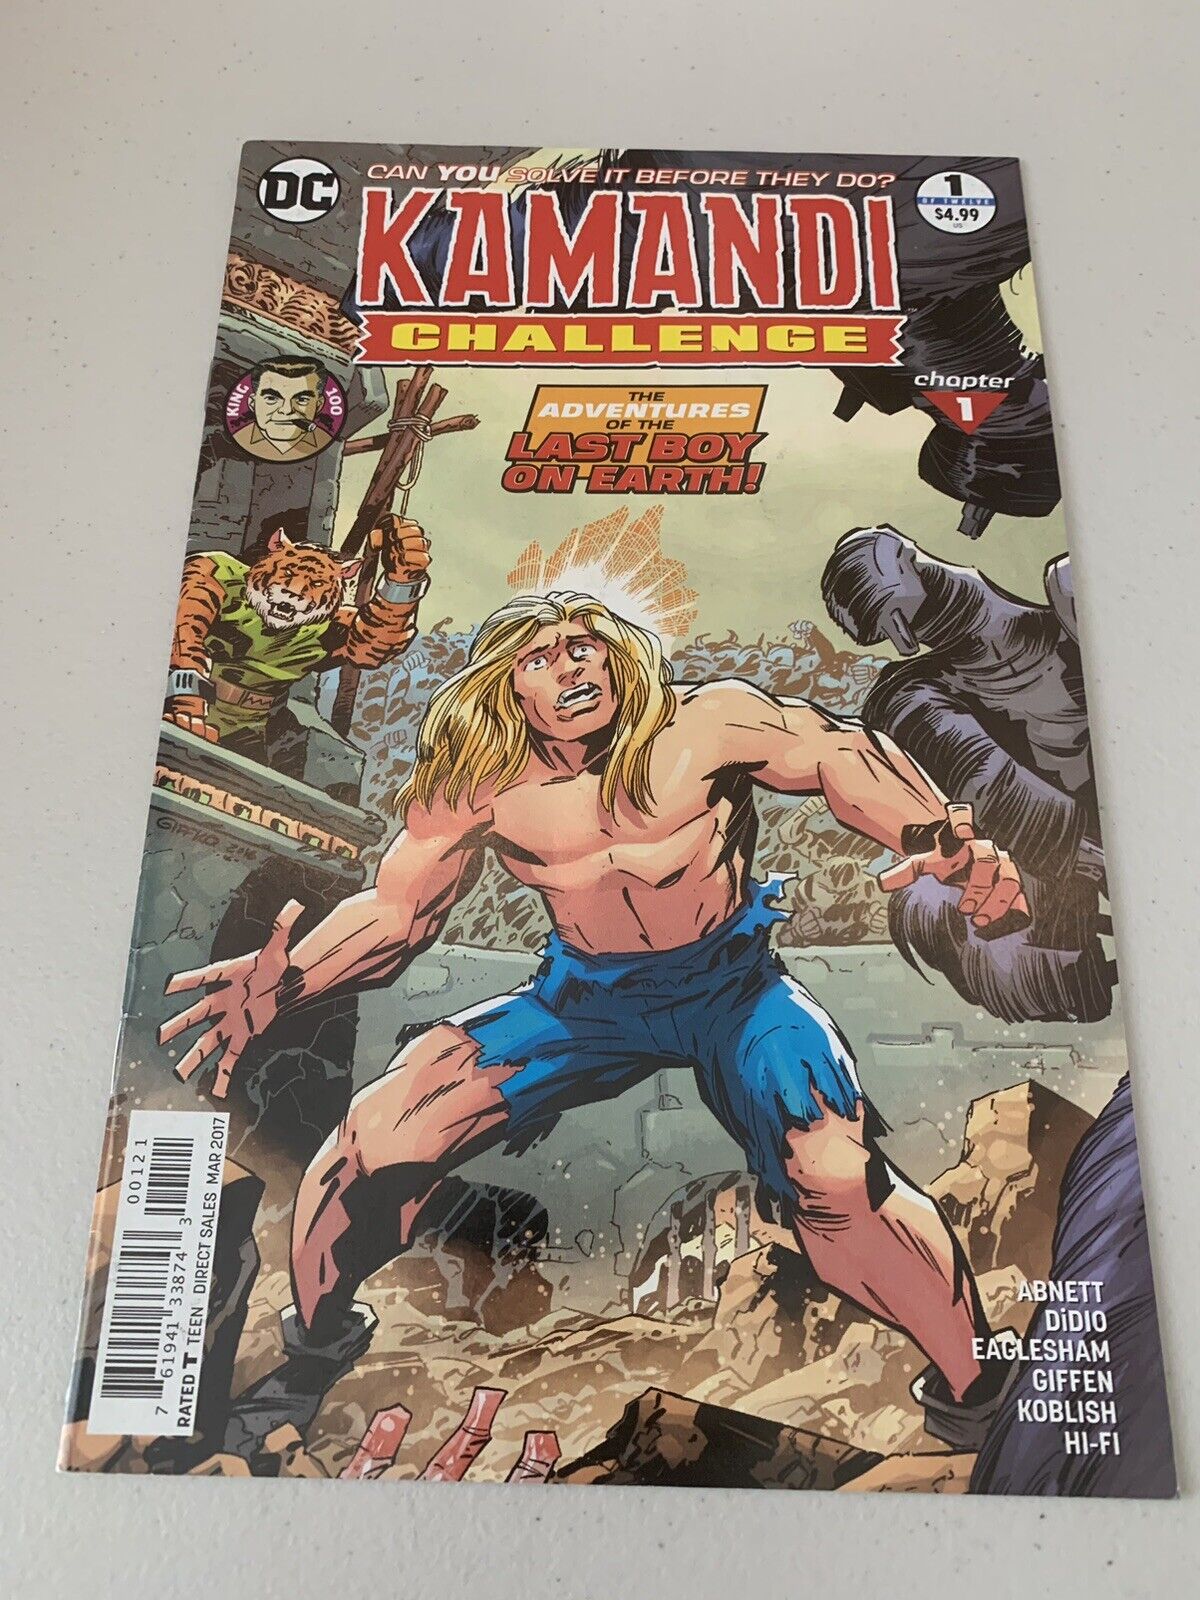 The Kamandi Challenge #1 (March 2017) DC Comics